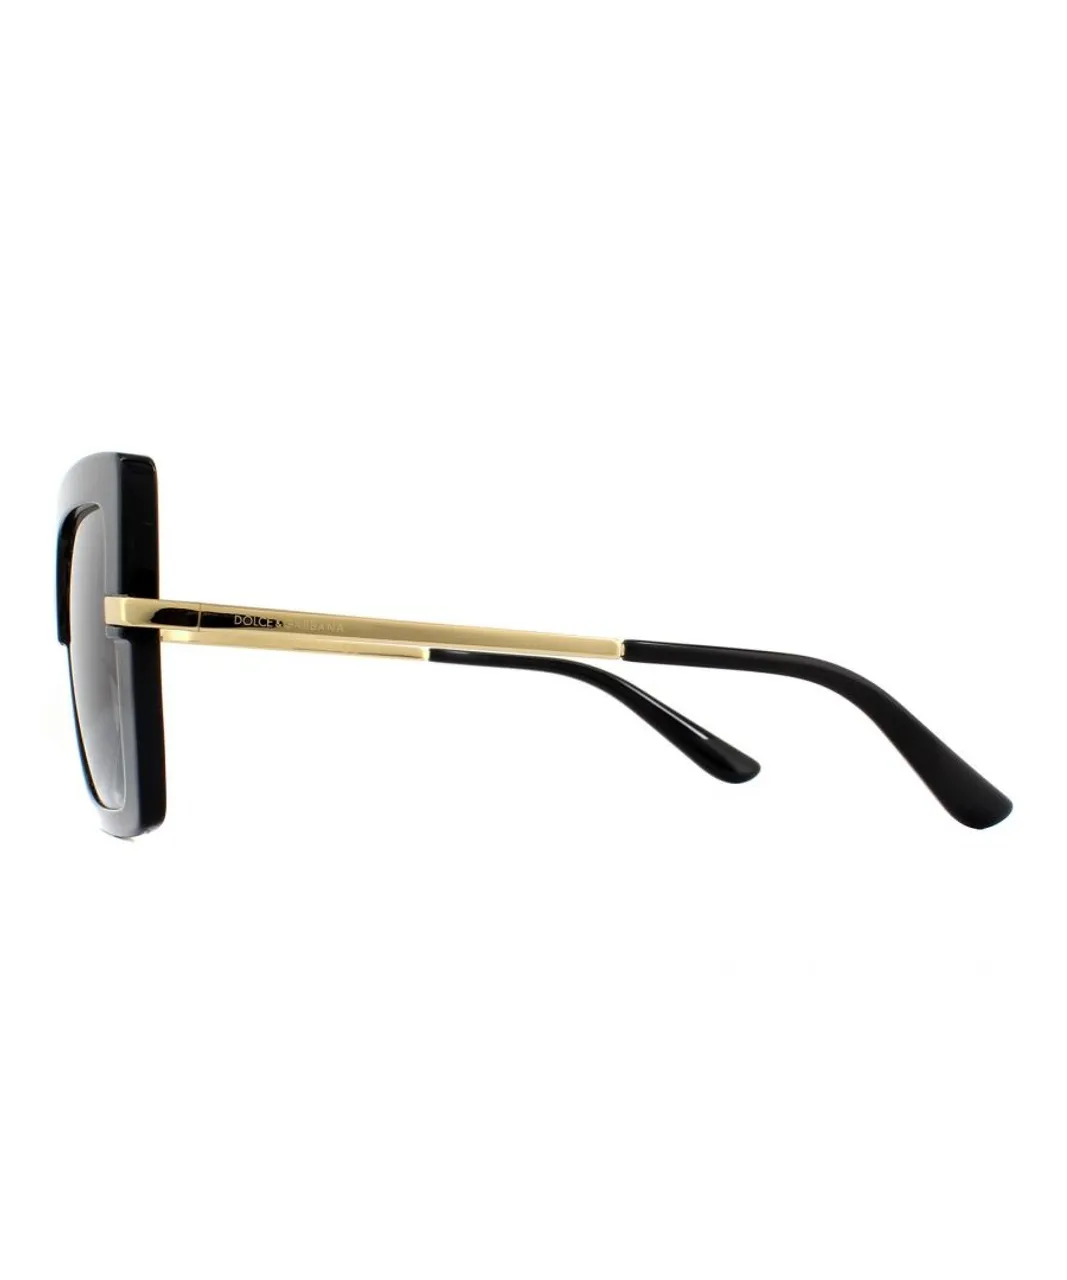 Dolce & Gabbana Womens Sunglasses DG4373 32468G Top Black on Transparent Grey Gradient Metal - One